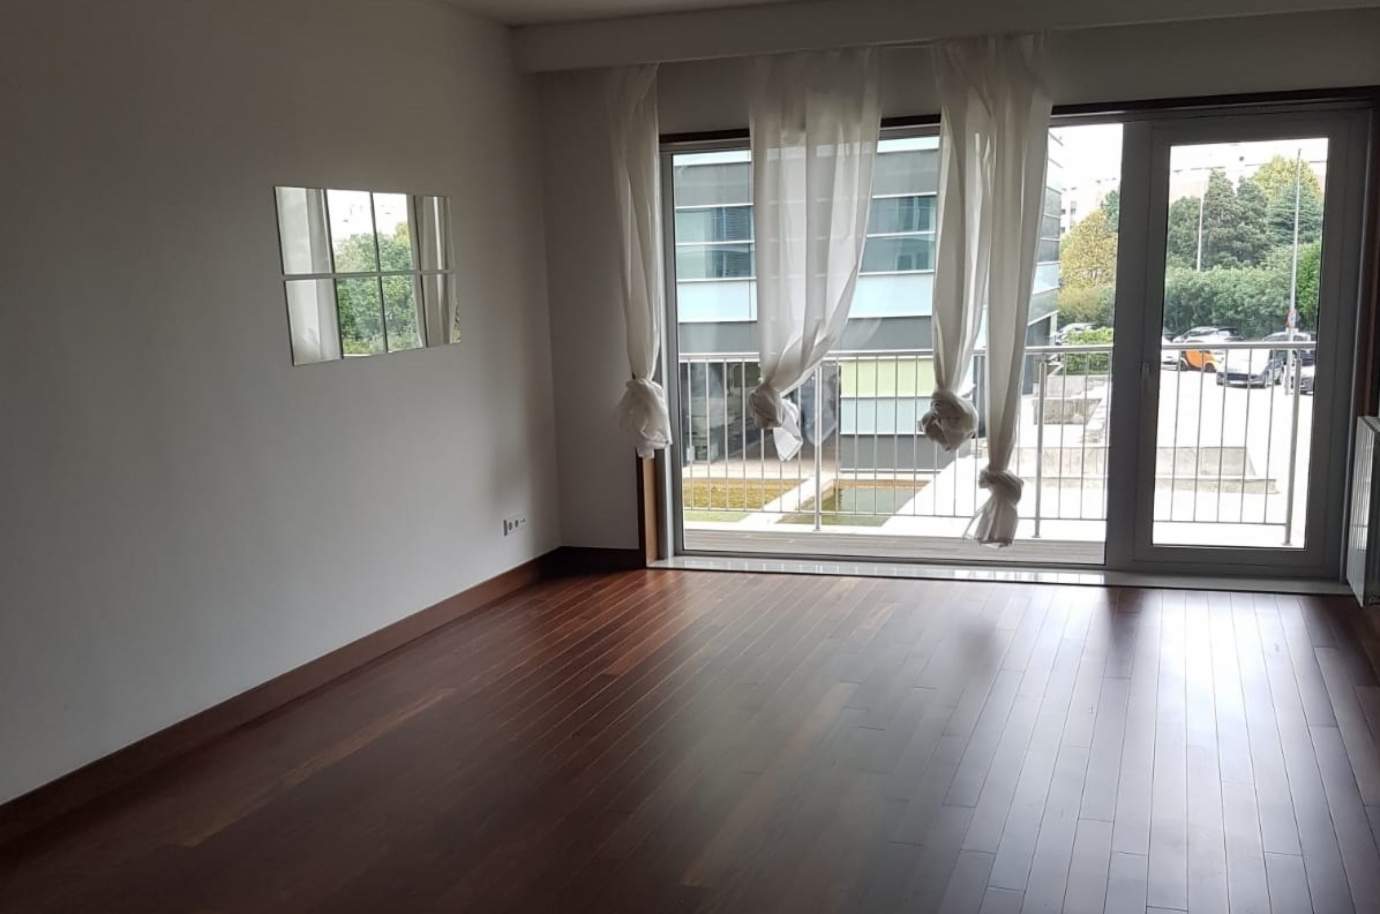 Sale of apartment as new, in Vila Nova de Gaia, Portugal_146692